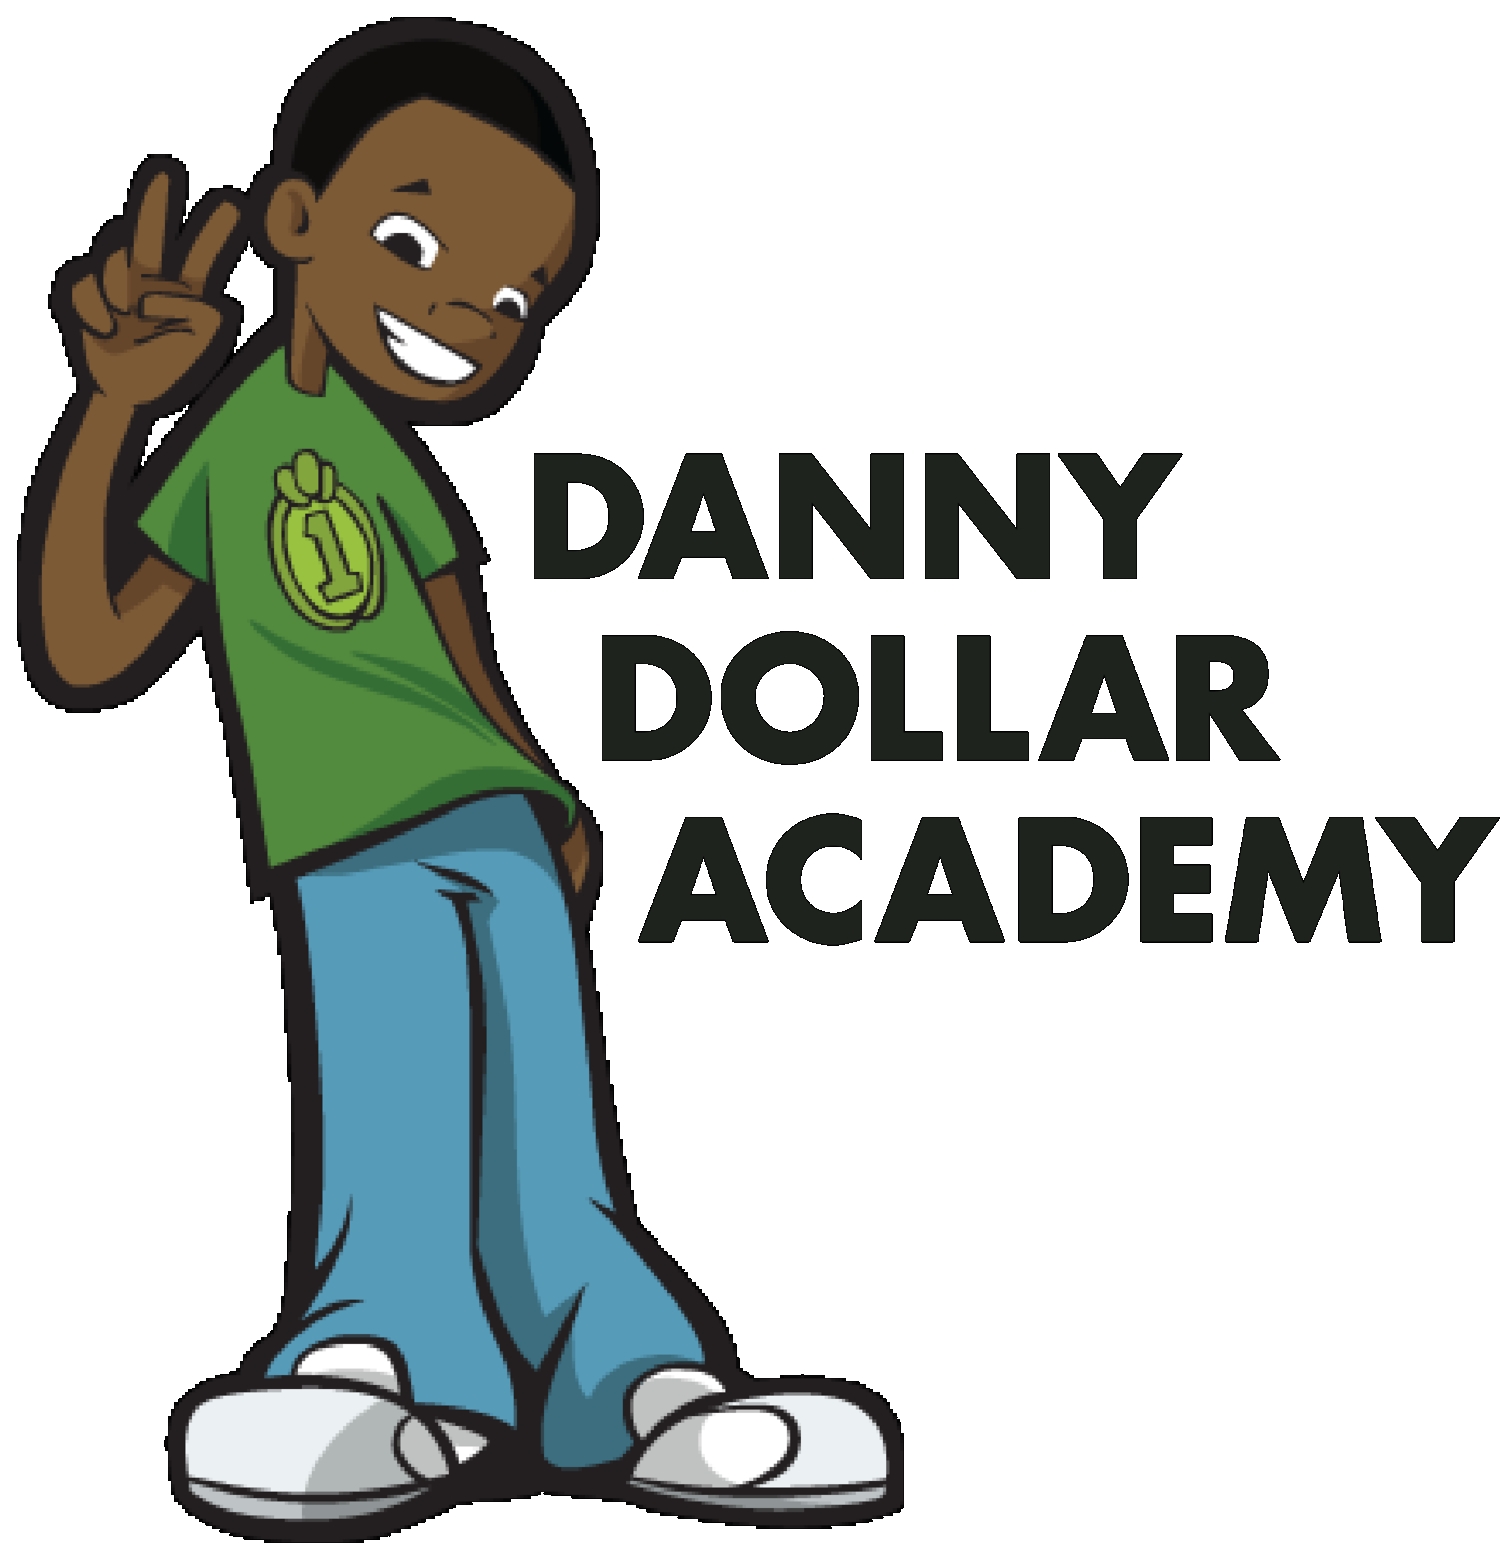 Danny Dollar Academy